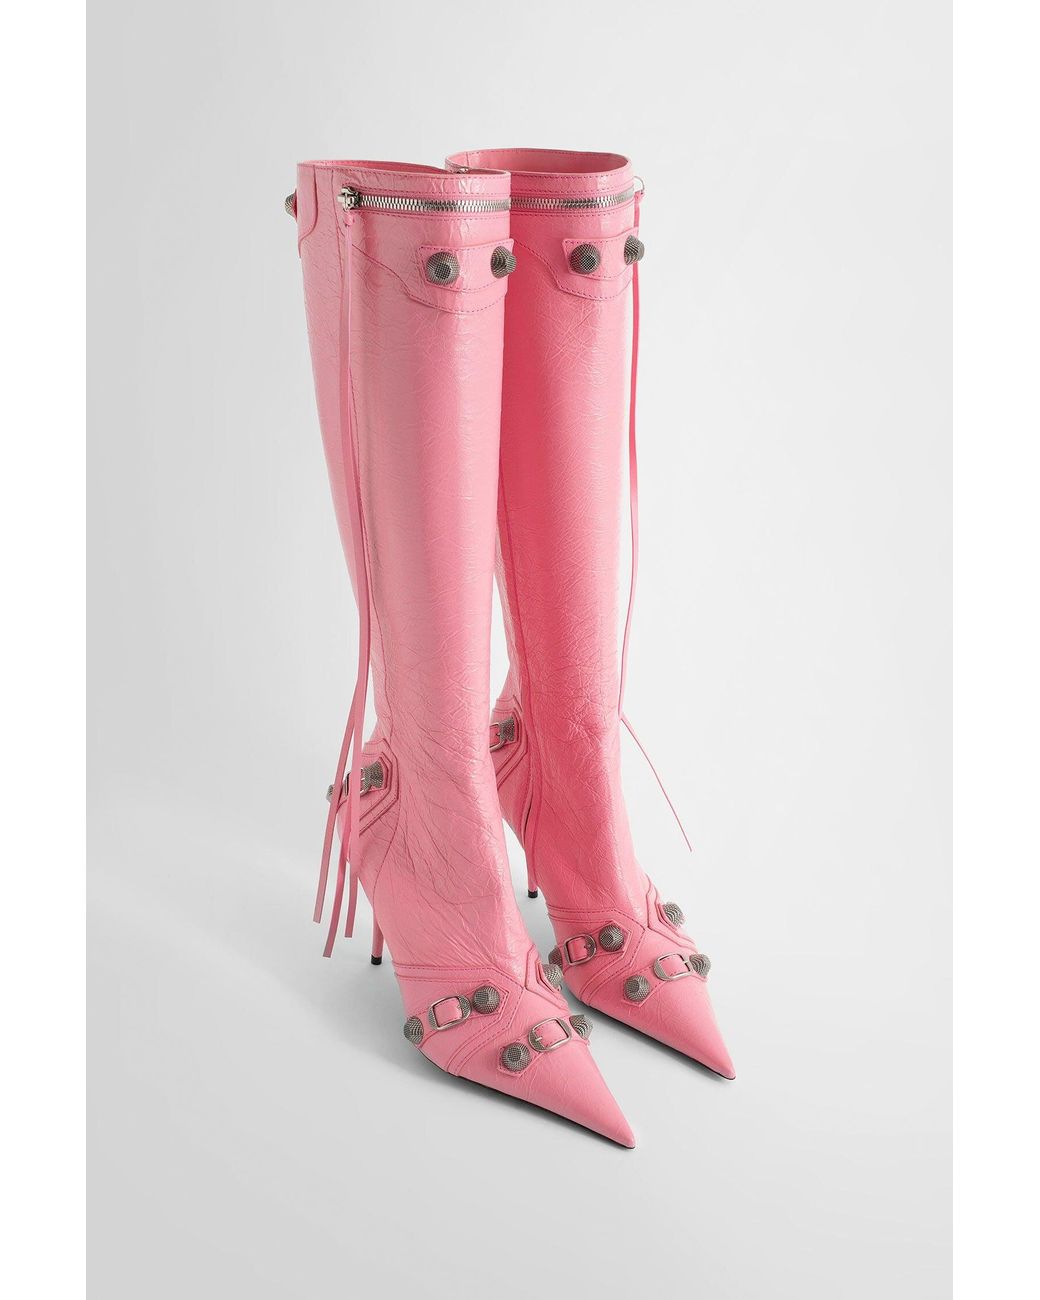 The Balenciaga Boots That Ruled the past  the Upcoming Season  Pink boots  outfit Fashion Balenciaga boots